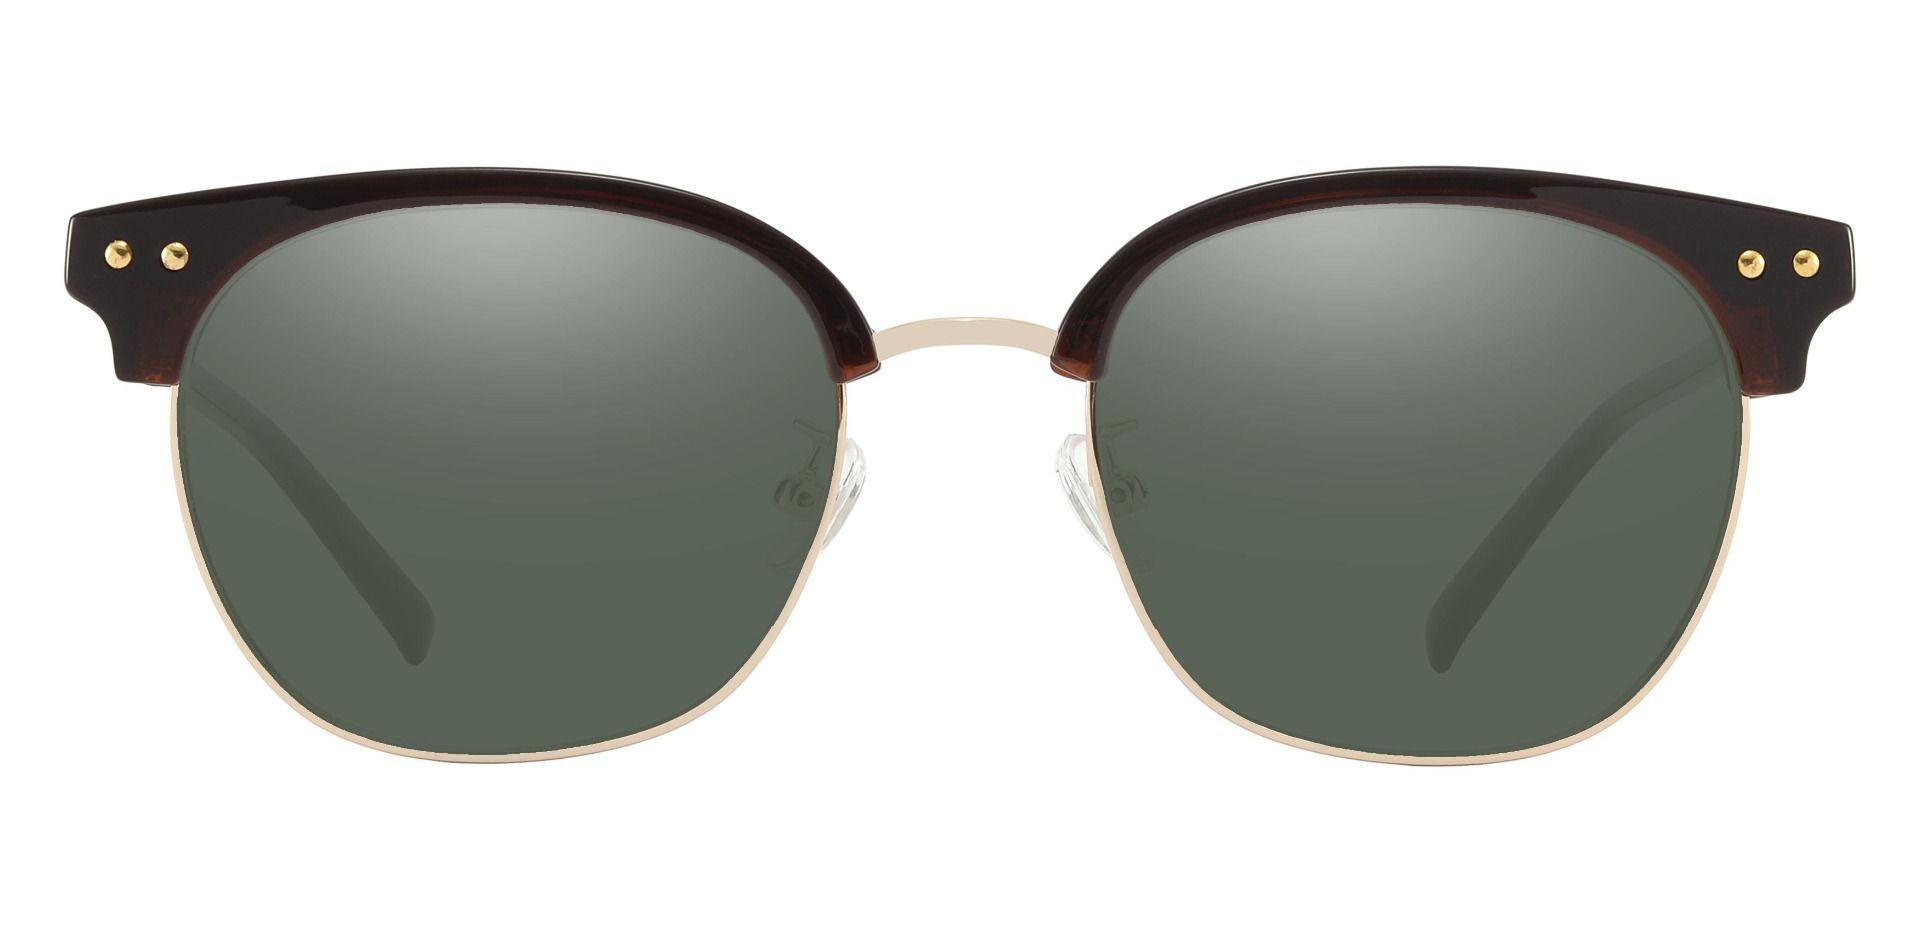 Bolivia Browline Progressive Sunglasses - Brown Frame With Green Lenses